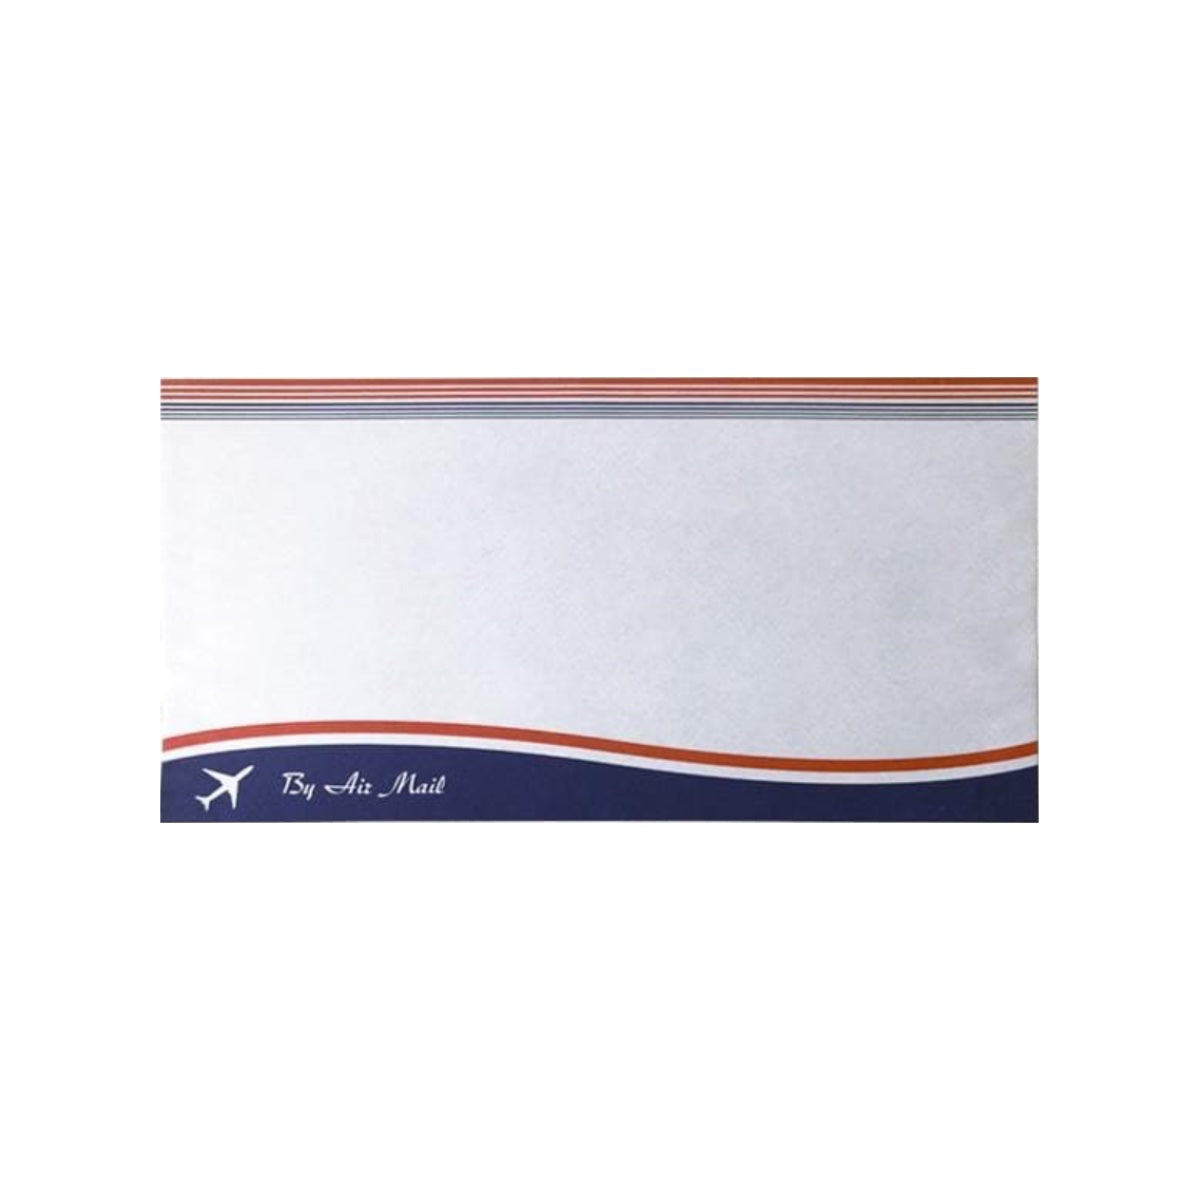 FIS Envelope Air Mail 115 x 225 mm, 70gsm, 50/pack